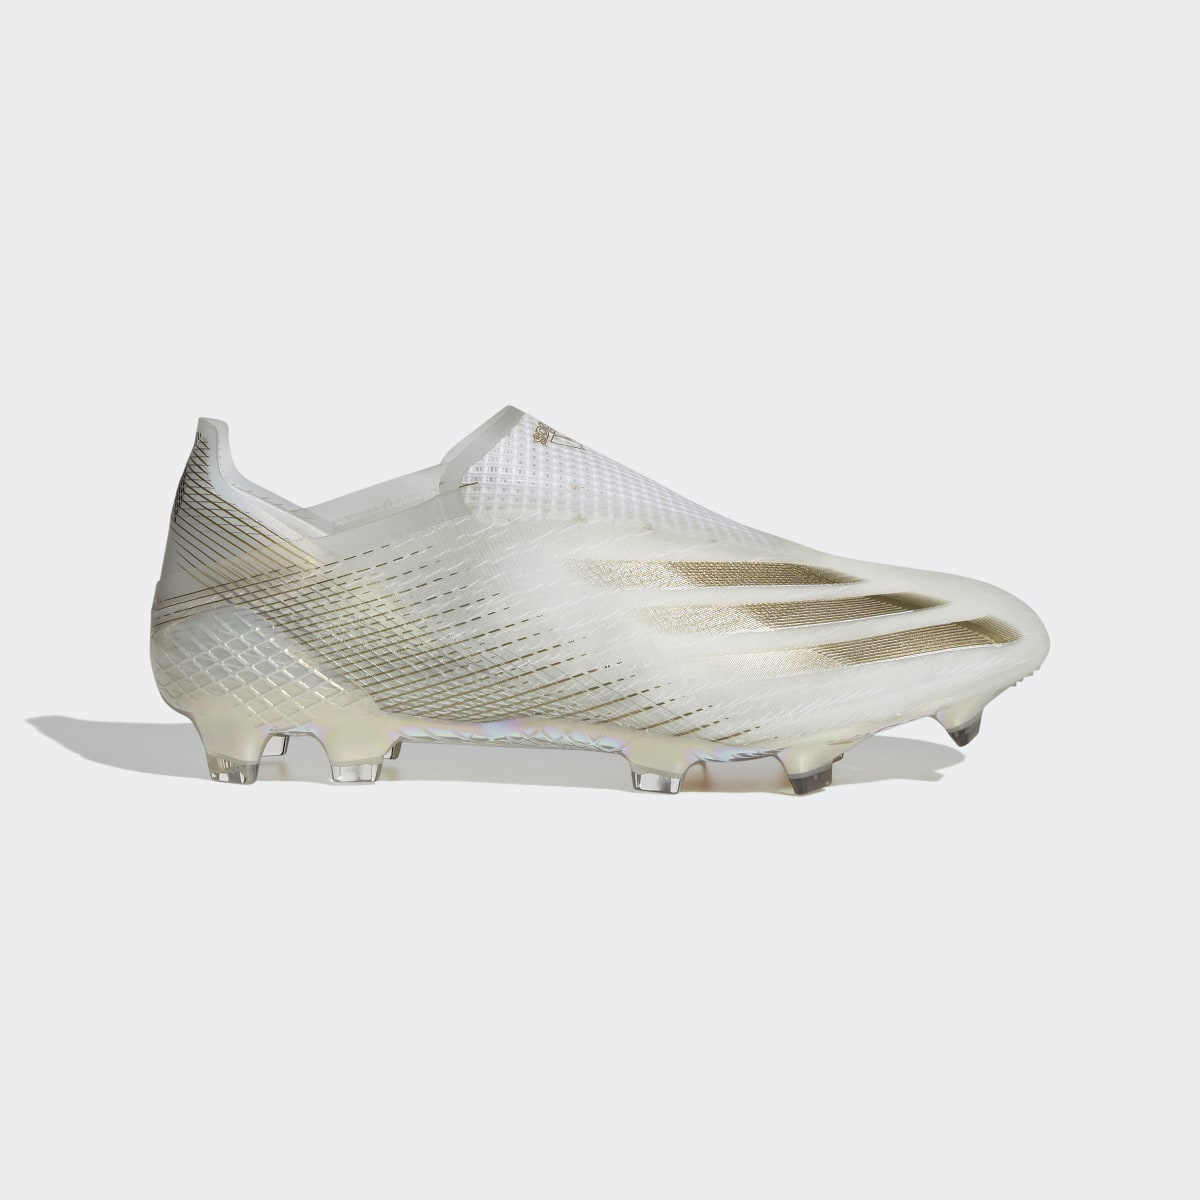 mens adidas soccer shoes